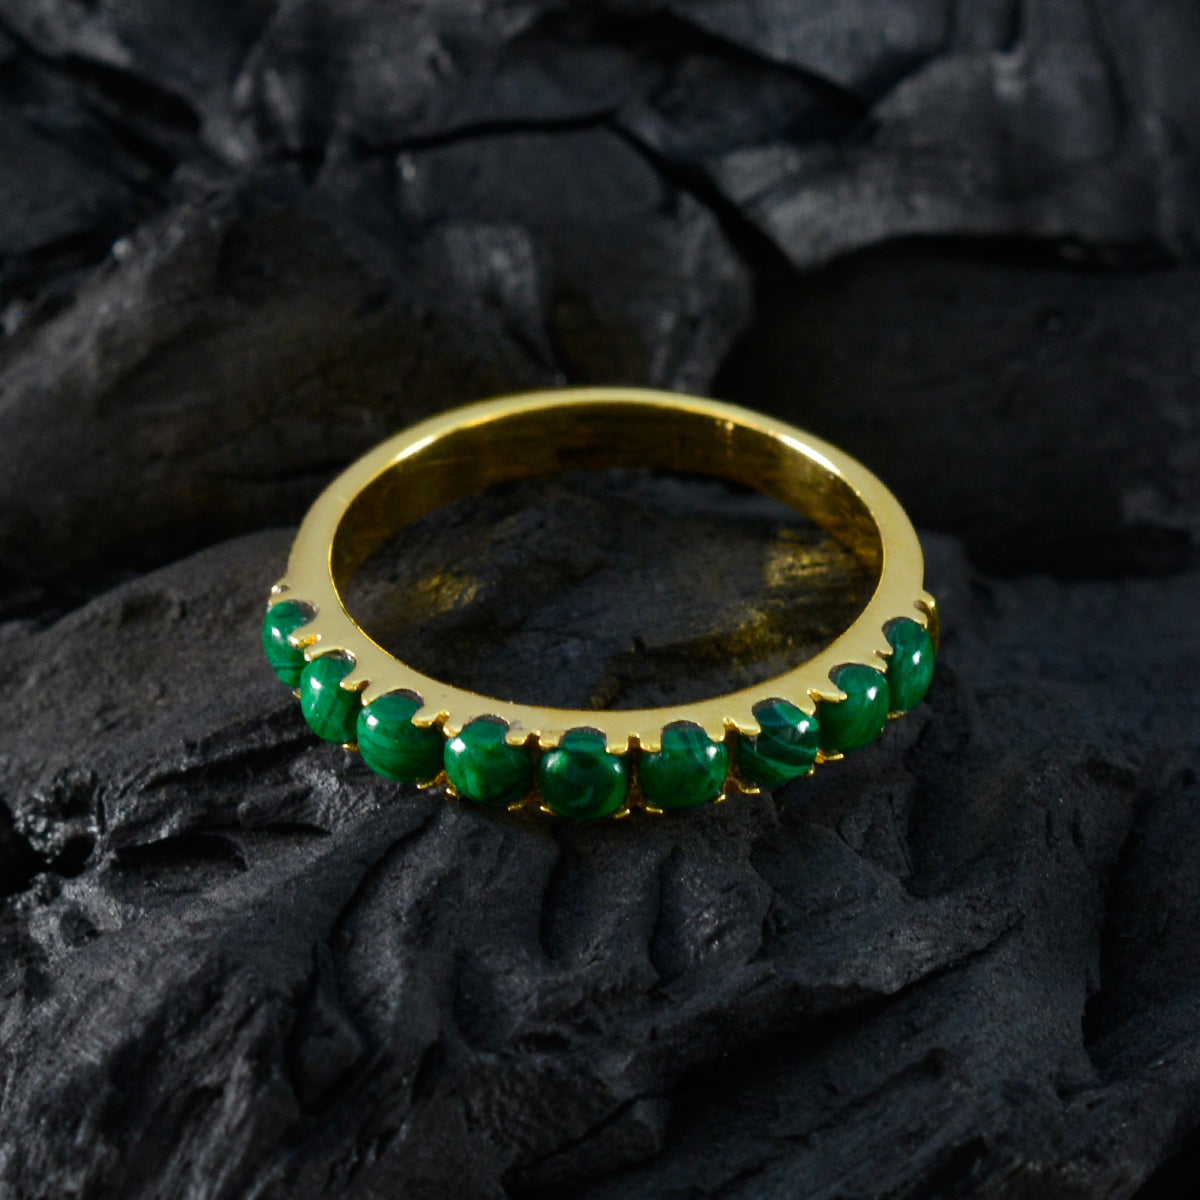 Riyo Perfect Silver Ring With Yellow Gold Plating Malachite Stone Round Shape Prong Setting  Jewelry Anniversary Ring